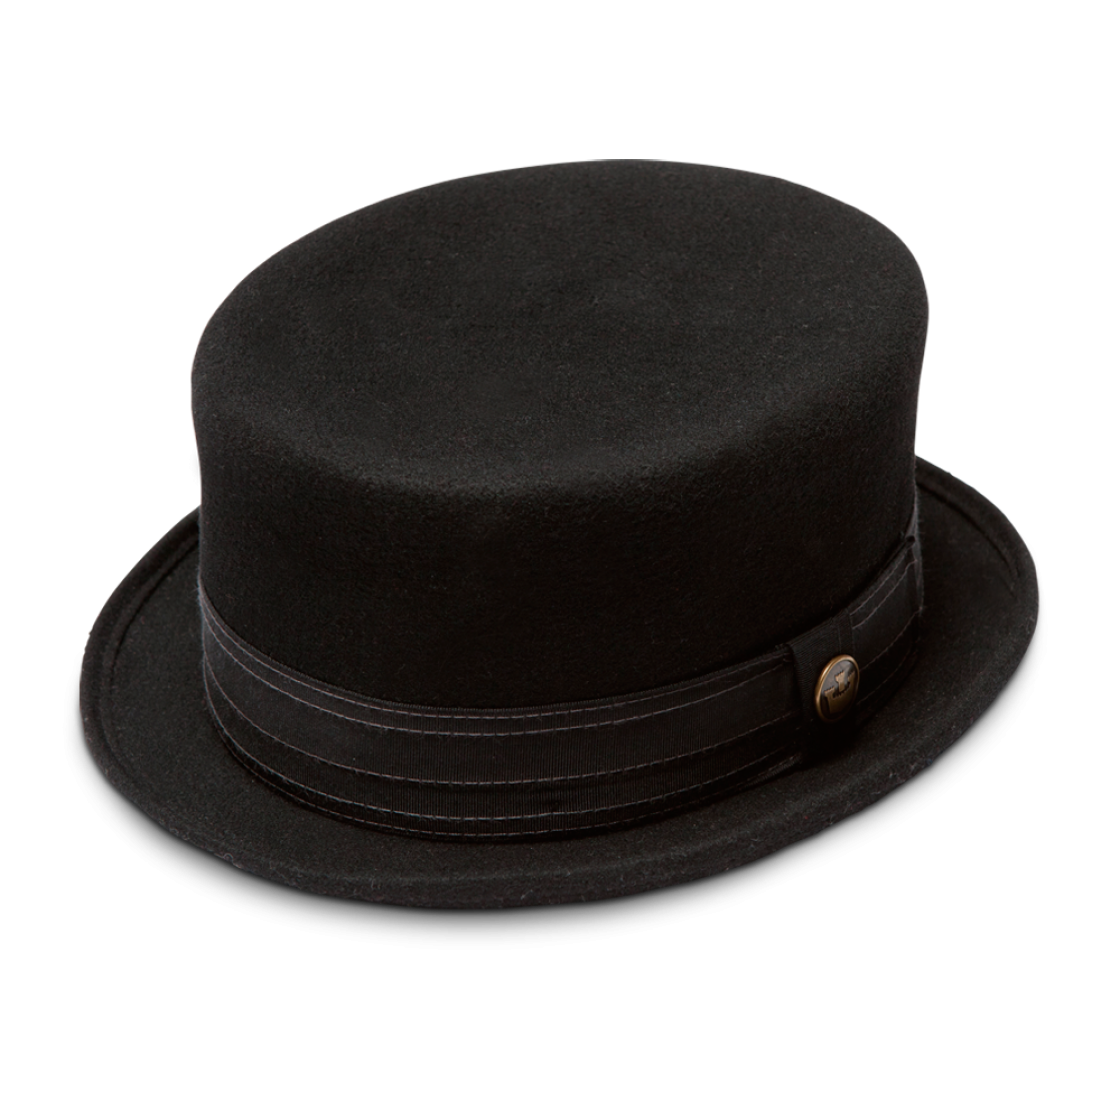 Magic Black Hat PNG imagen transparente